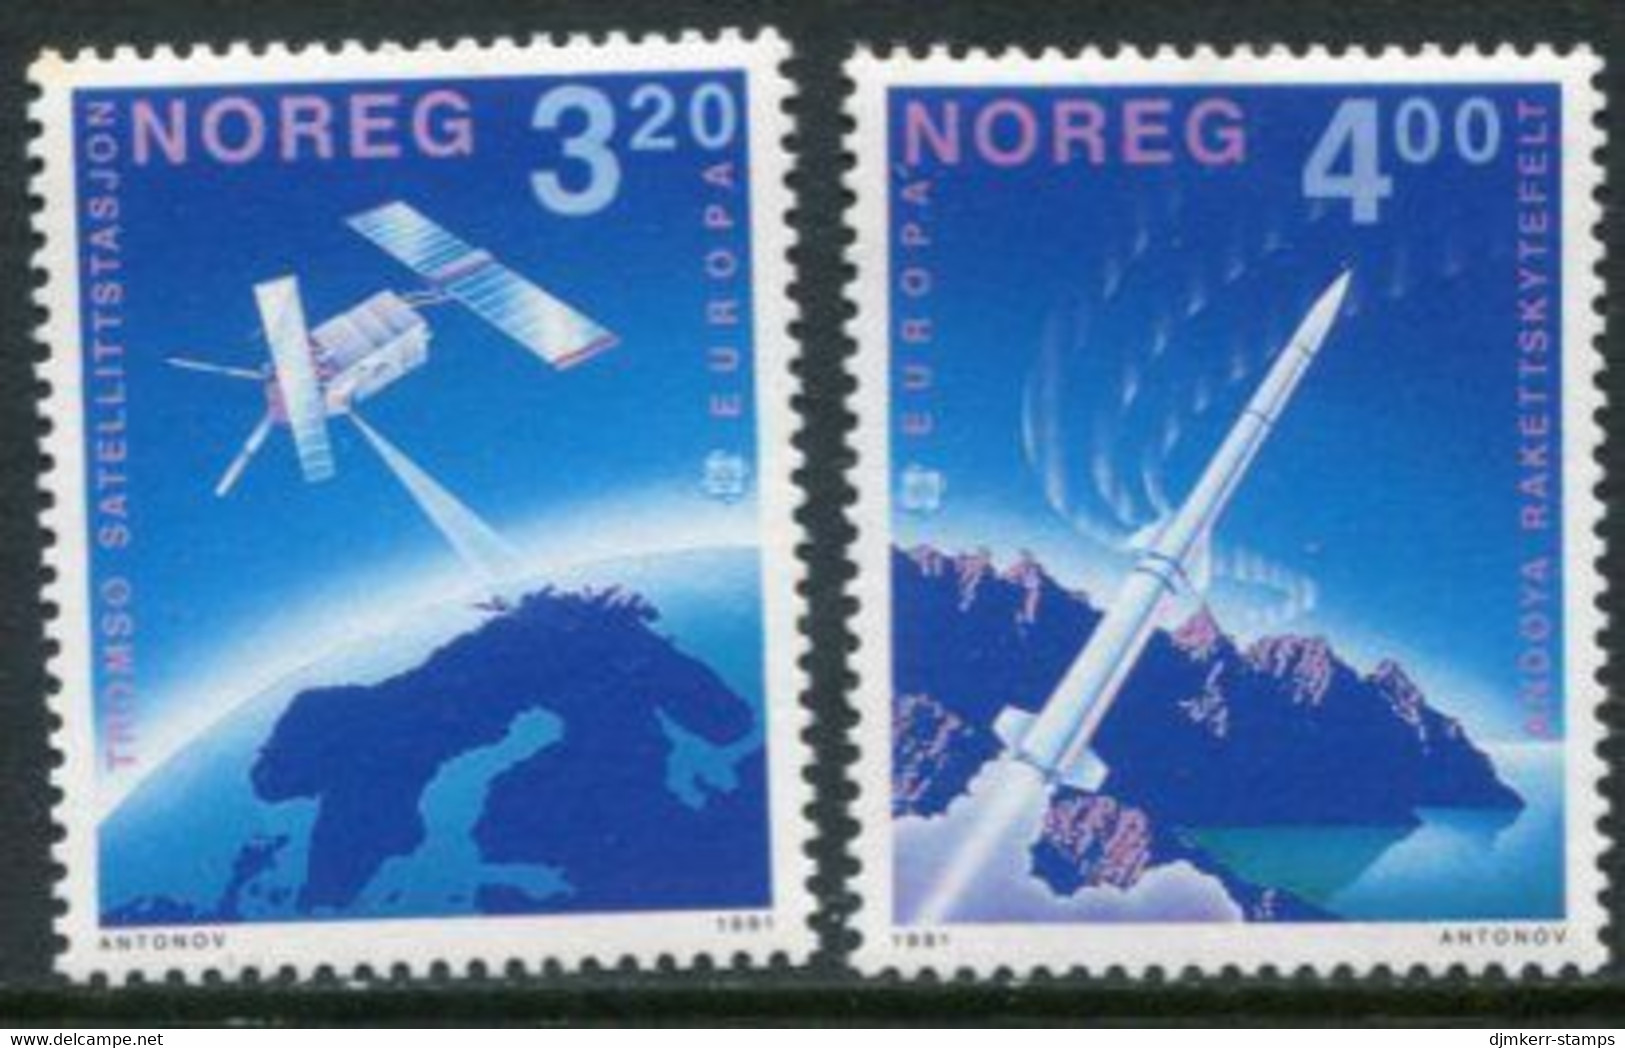 NORWAY 1991 Europa: Space Exploration MNH / **.   Michel 1062-63 - Nuovi